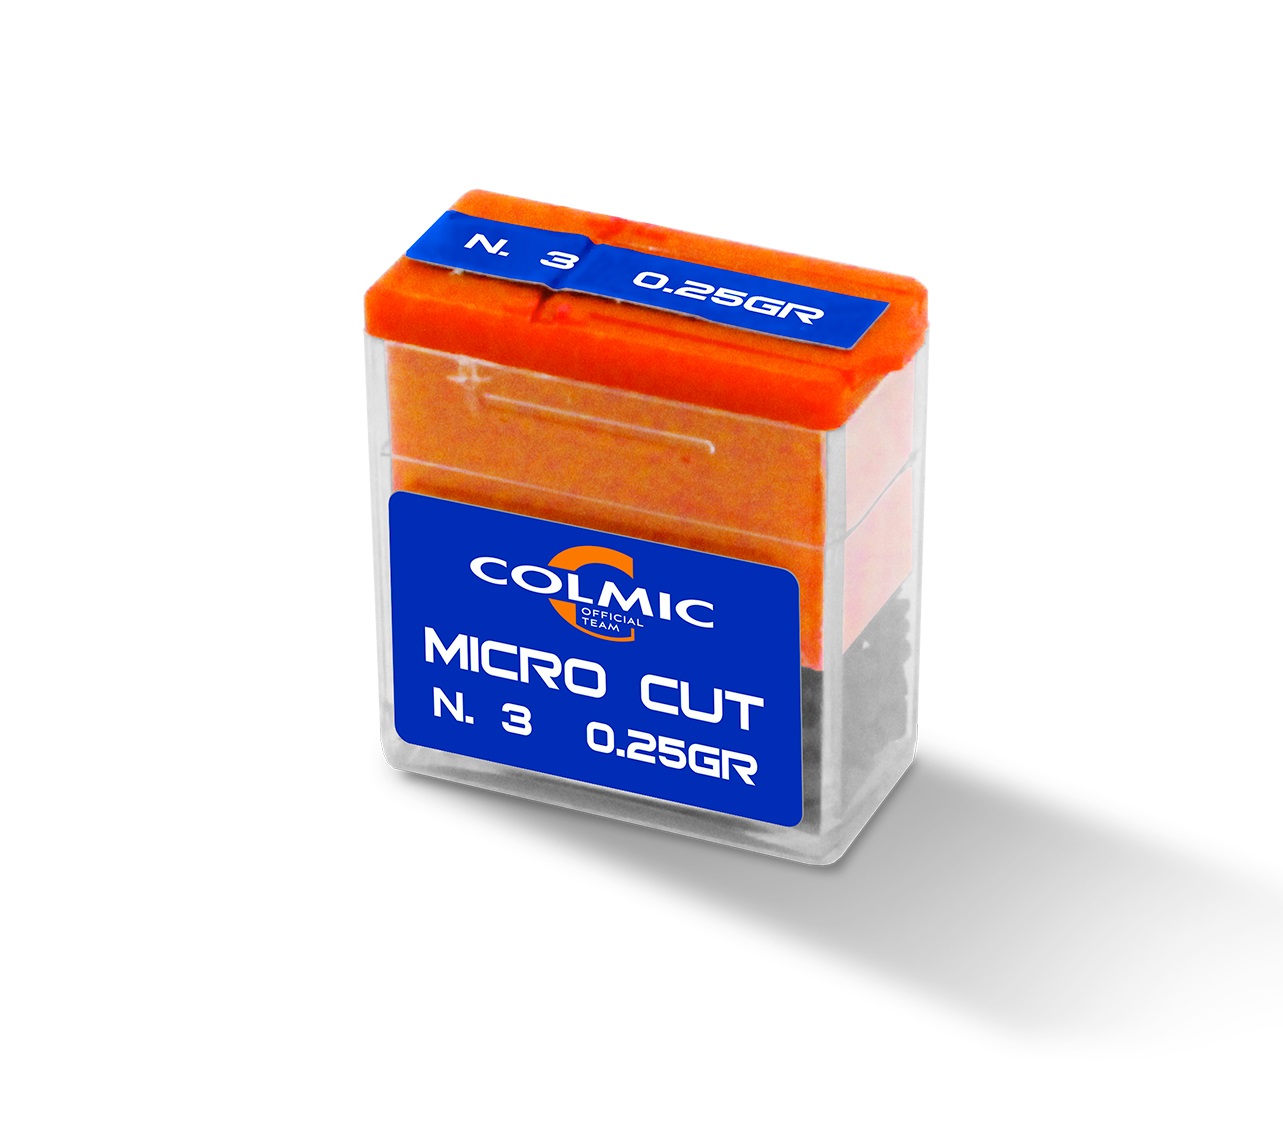 Śruciny Ołowiane Colmic Dispenser Micro Cut N. 8 (0.064g)